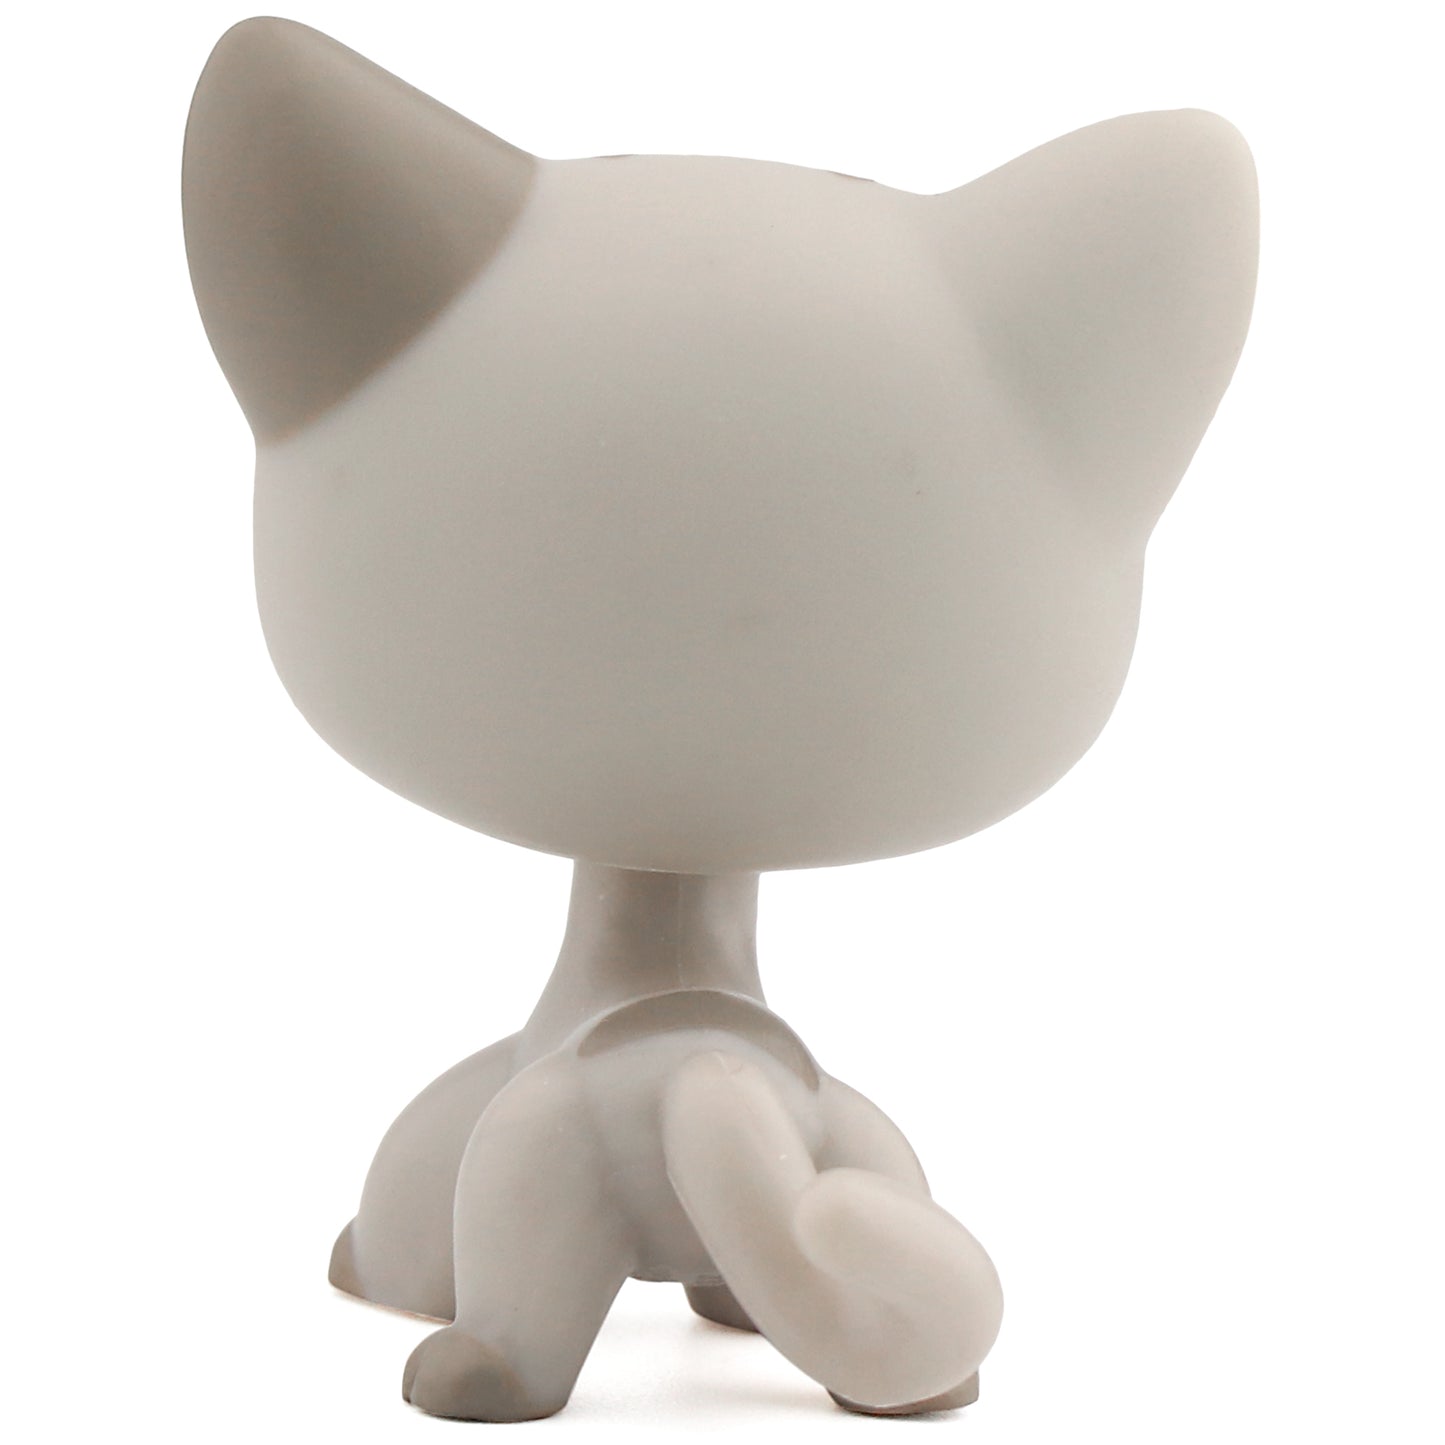 Littlest Pet Shop LPS #468 Grey Shorthair Cat Teal Blue Flower Eyes Kids Gift